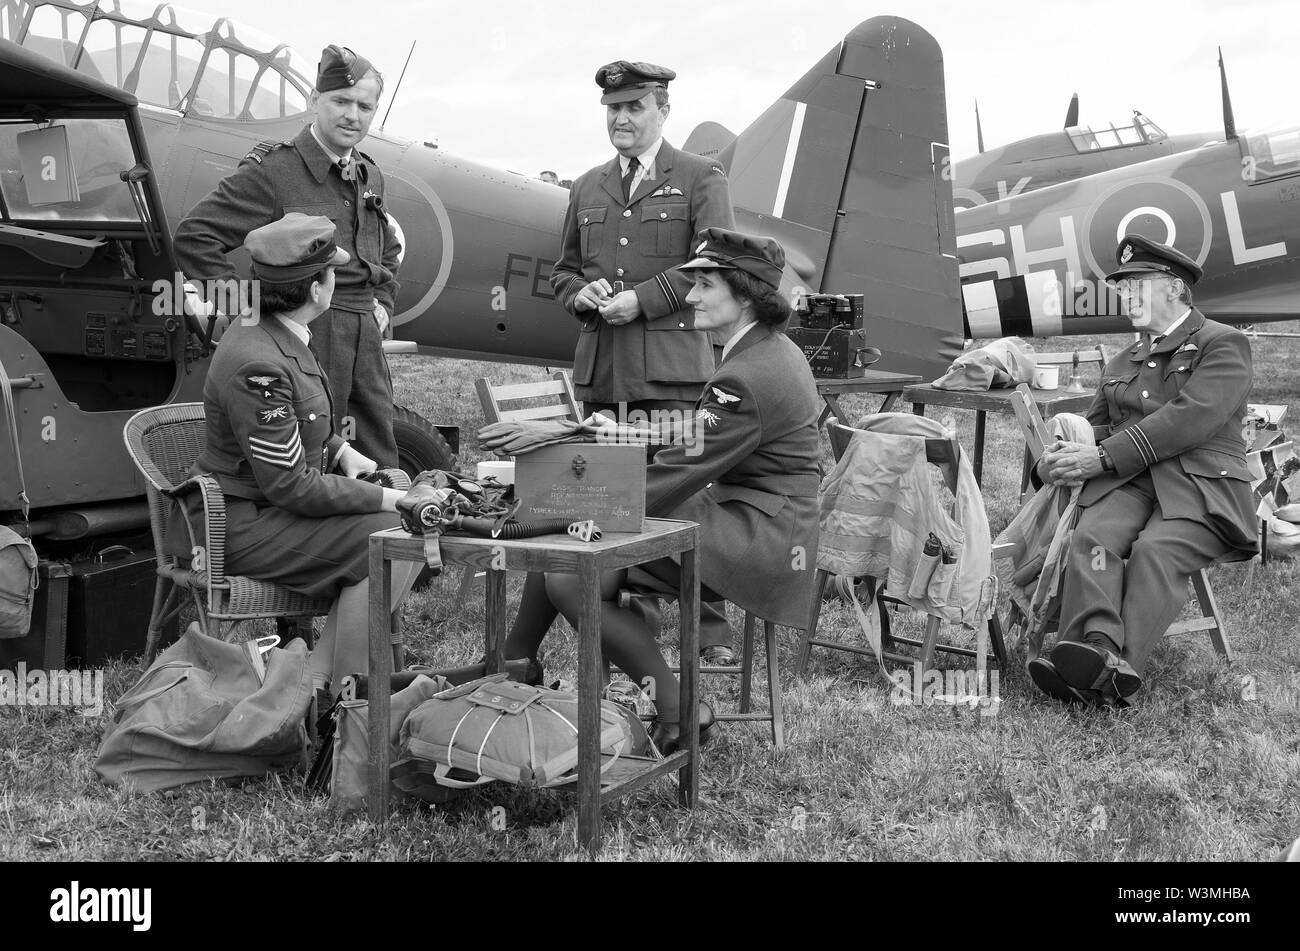 Battle of Britain era Second World War scenario with pilots, WRAFs & ground crew engineer re-enactors in discussion. Planes. Monochrome. Black & white Stock Photo